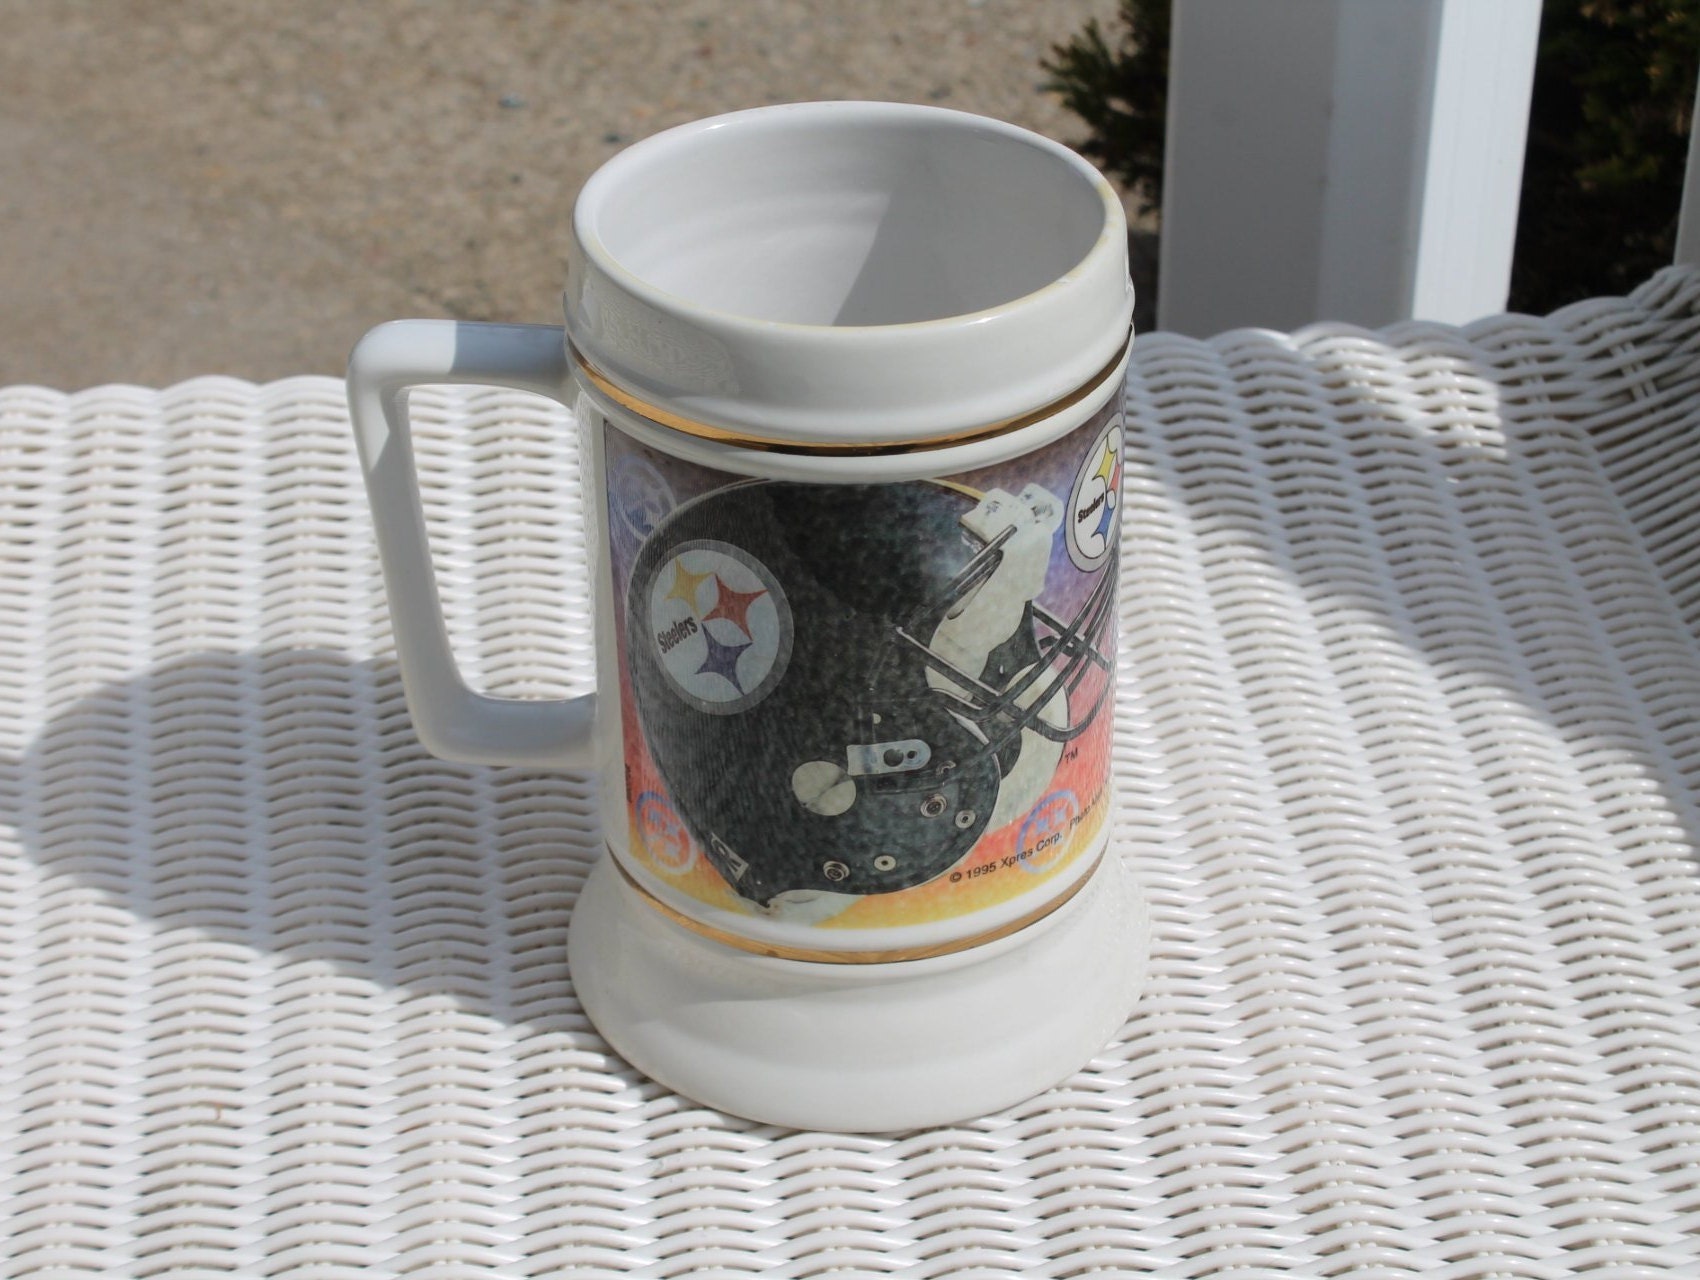 Pittsburgh Steelers 23 oz. DOUBLE Ceramic Mug – Great American